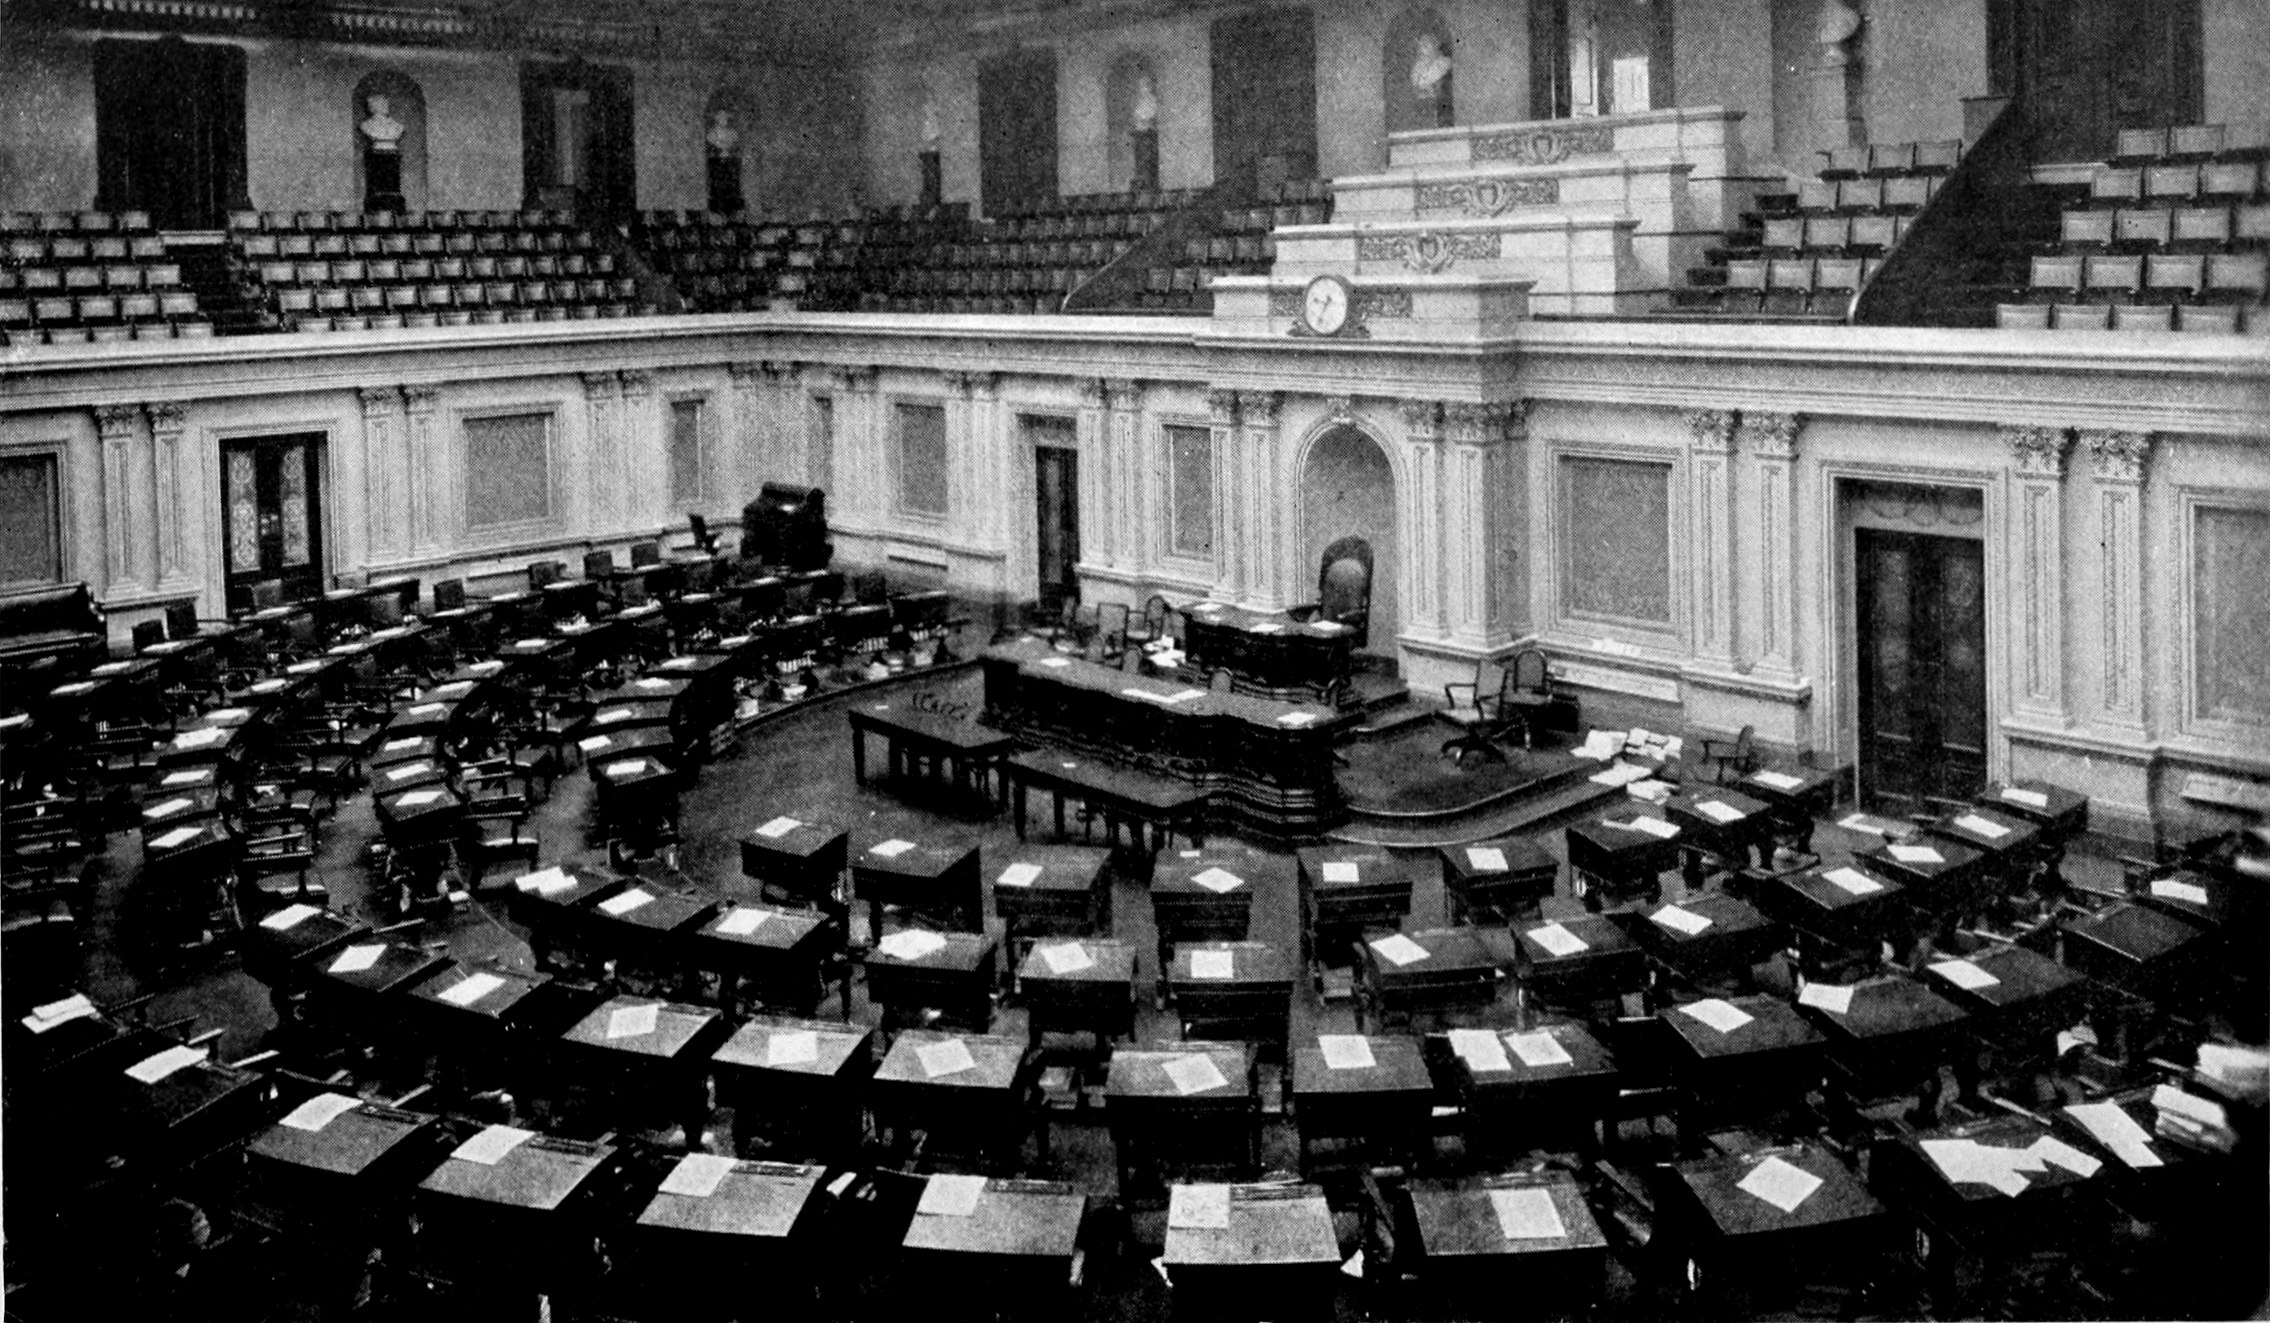 Collier's_1921_United_States_of_America_-_Senate_Chamber-1.jpg